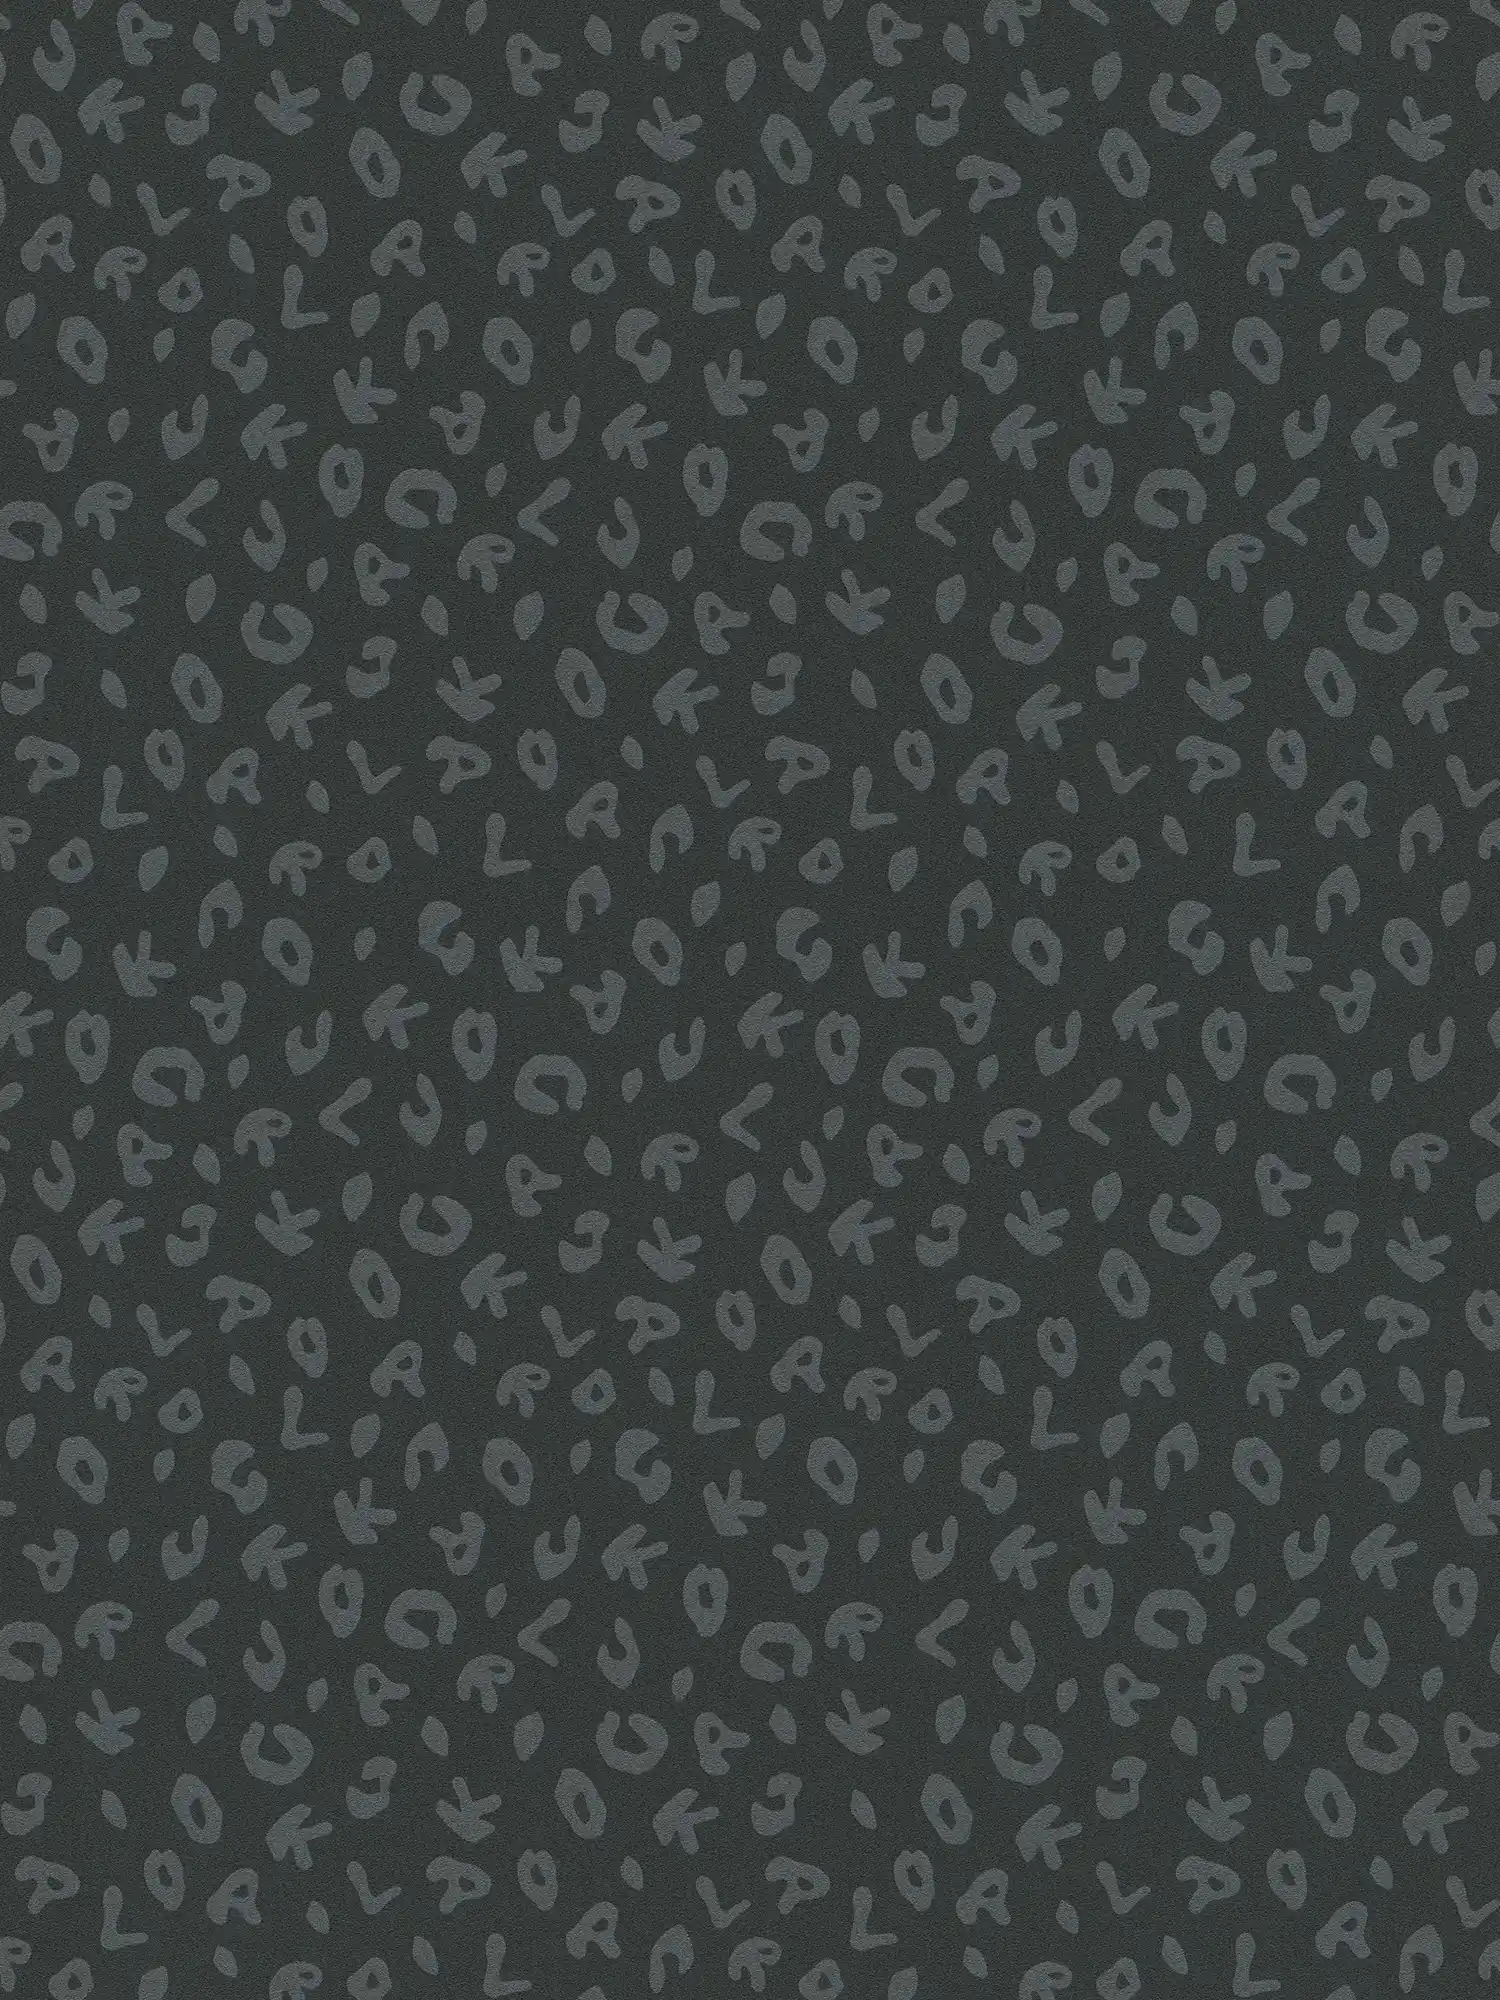         Karl LAGERFELD behang zilver luipaard print - metallic, zwart
    